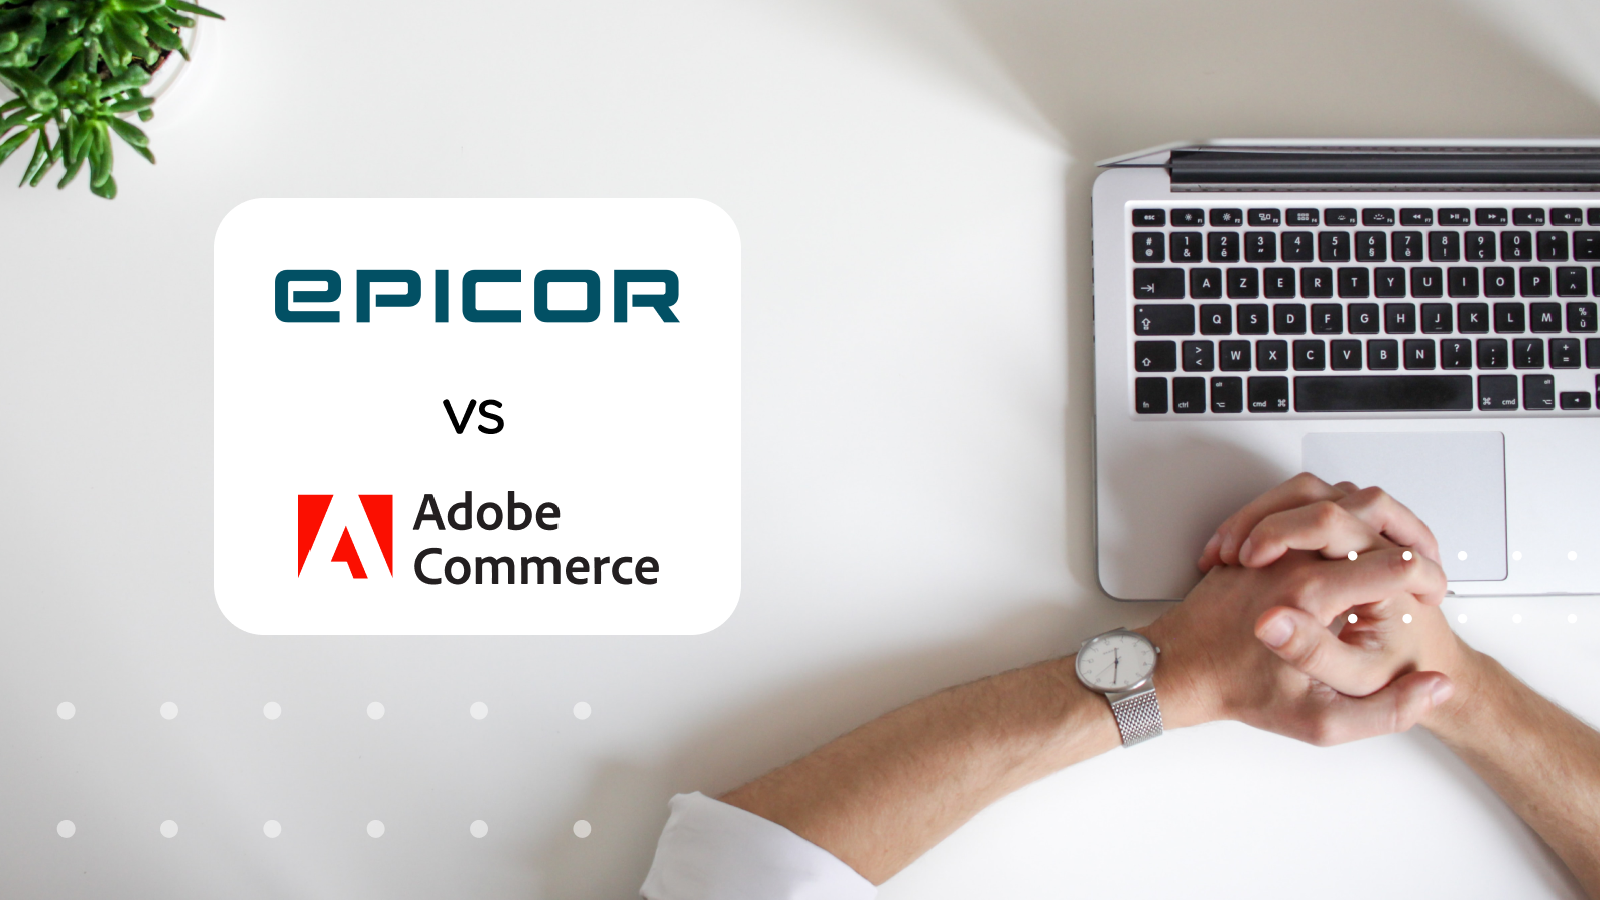 Epicor vs Adobe Commerce